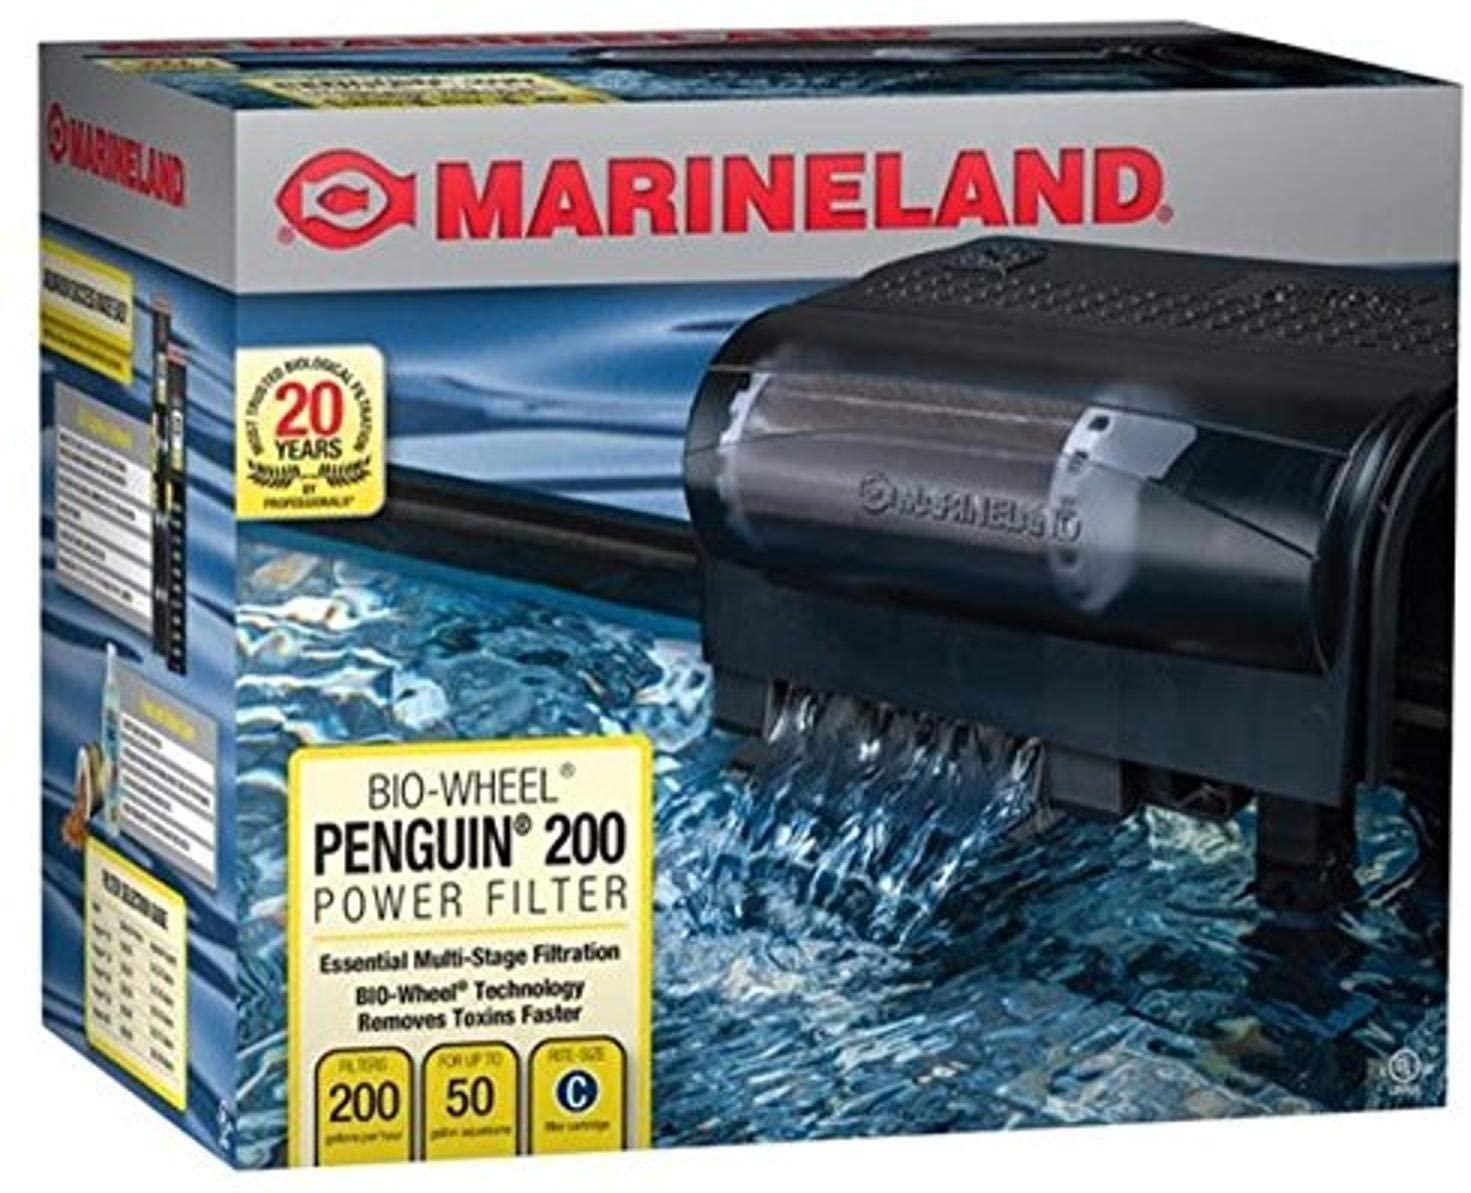 MarineLand Penguin Bio-Wheel Power Filter for $11.72 Shipped